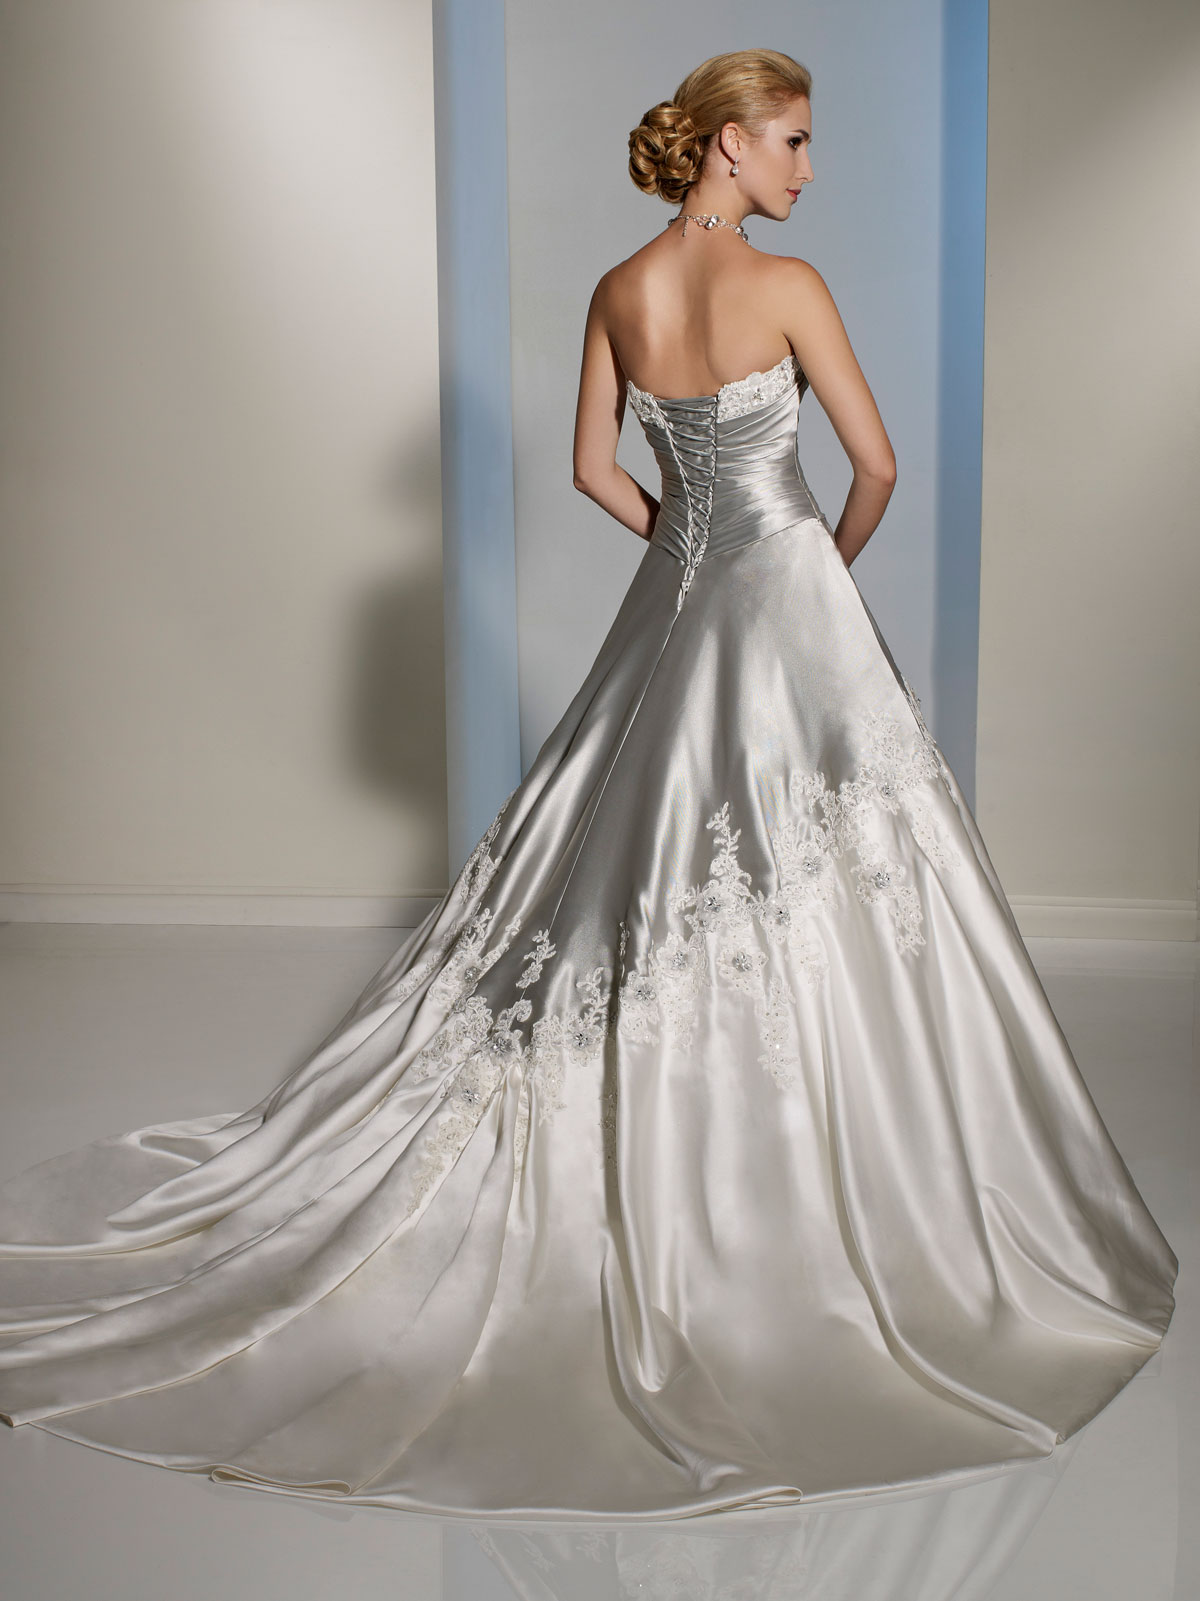 Silver and white draped bodice wedding dress.